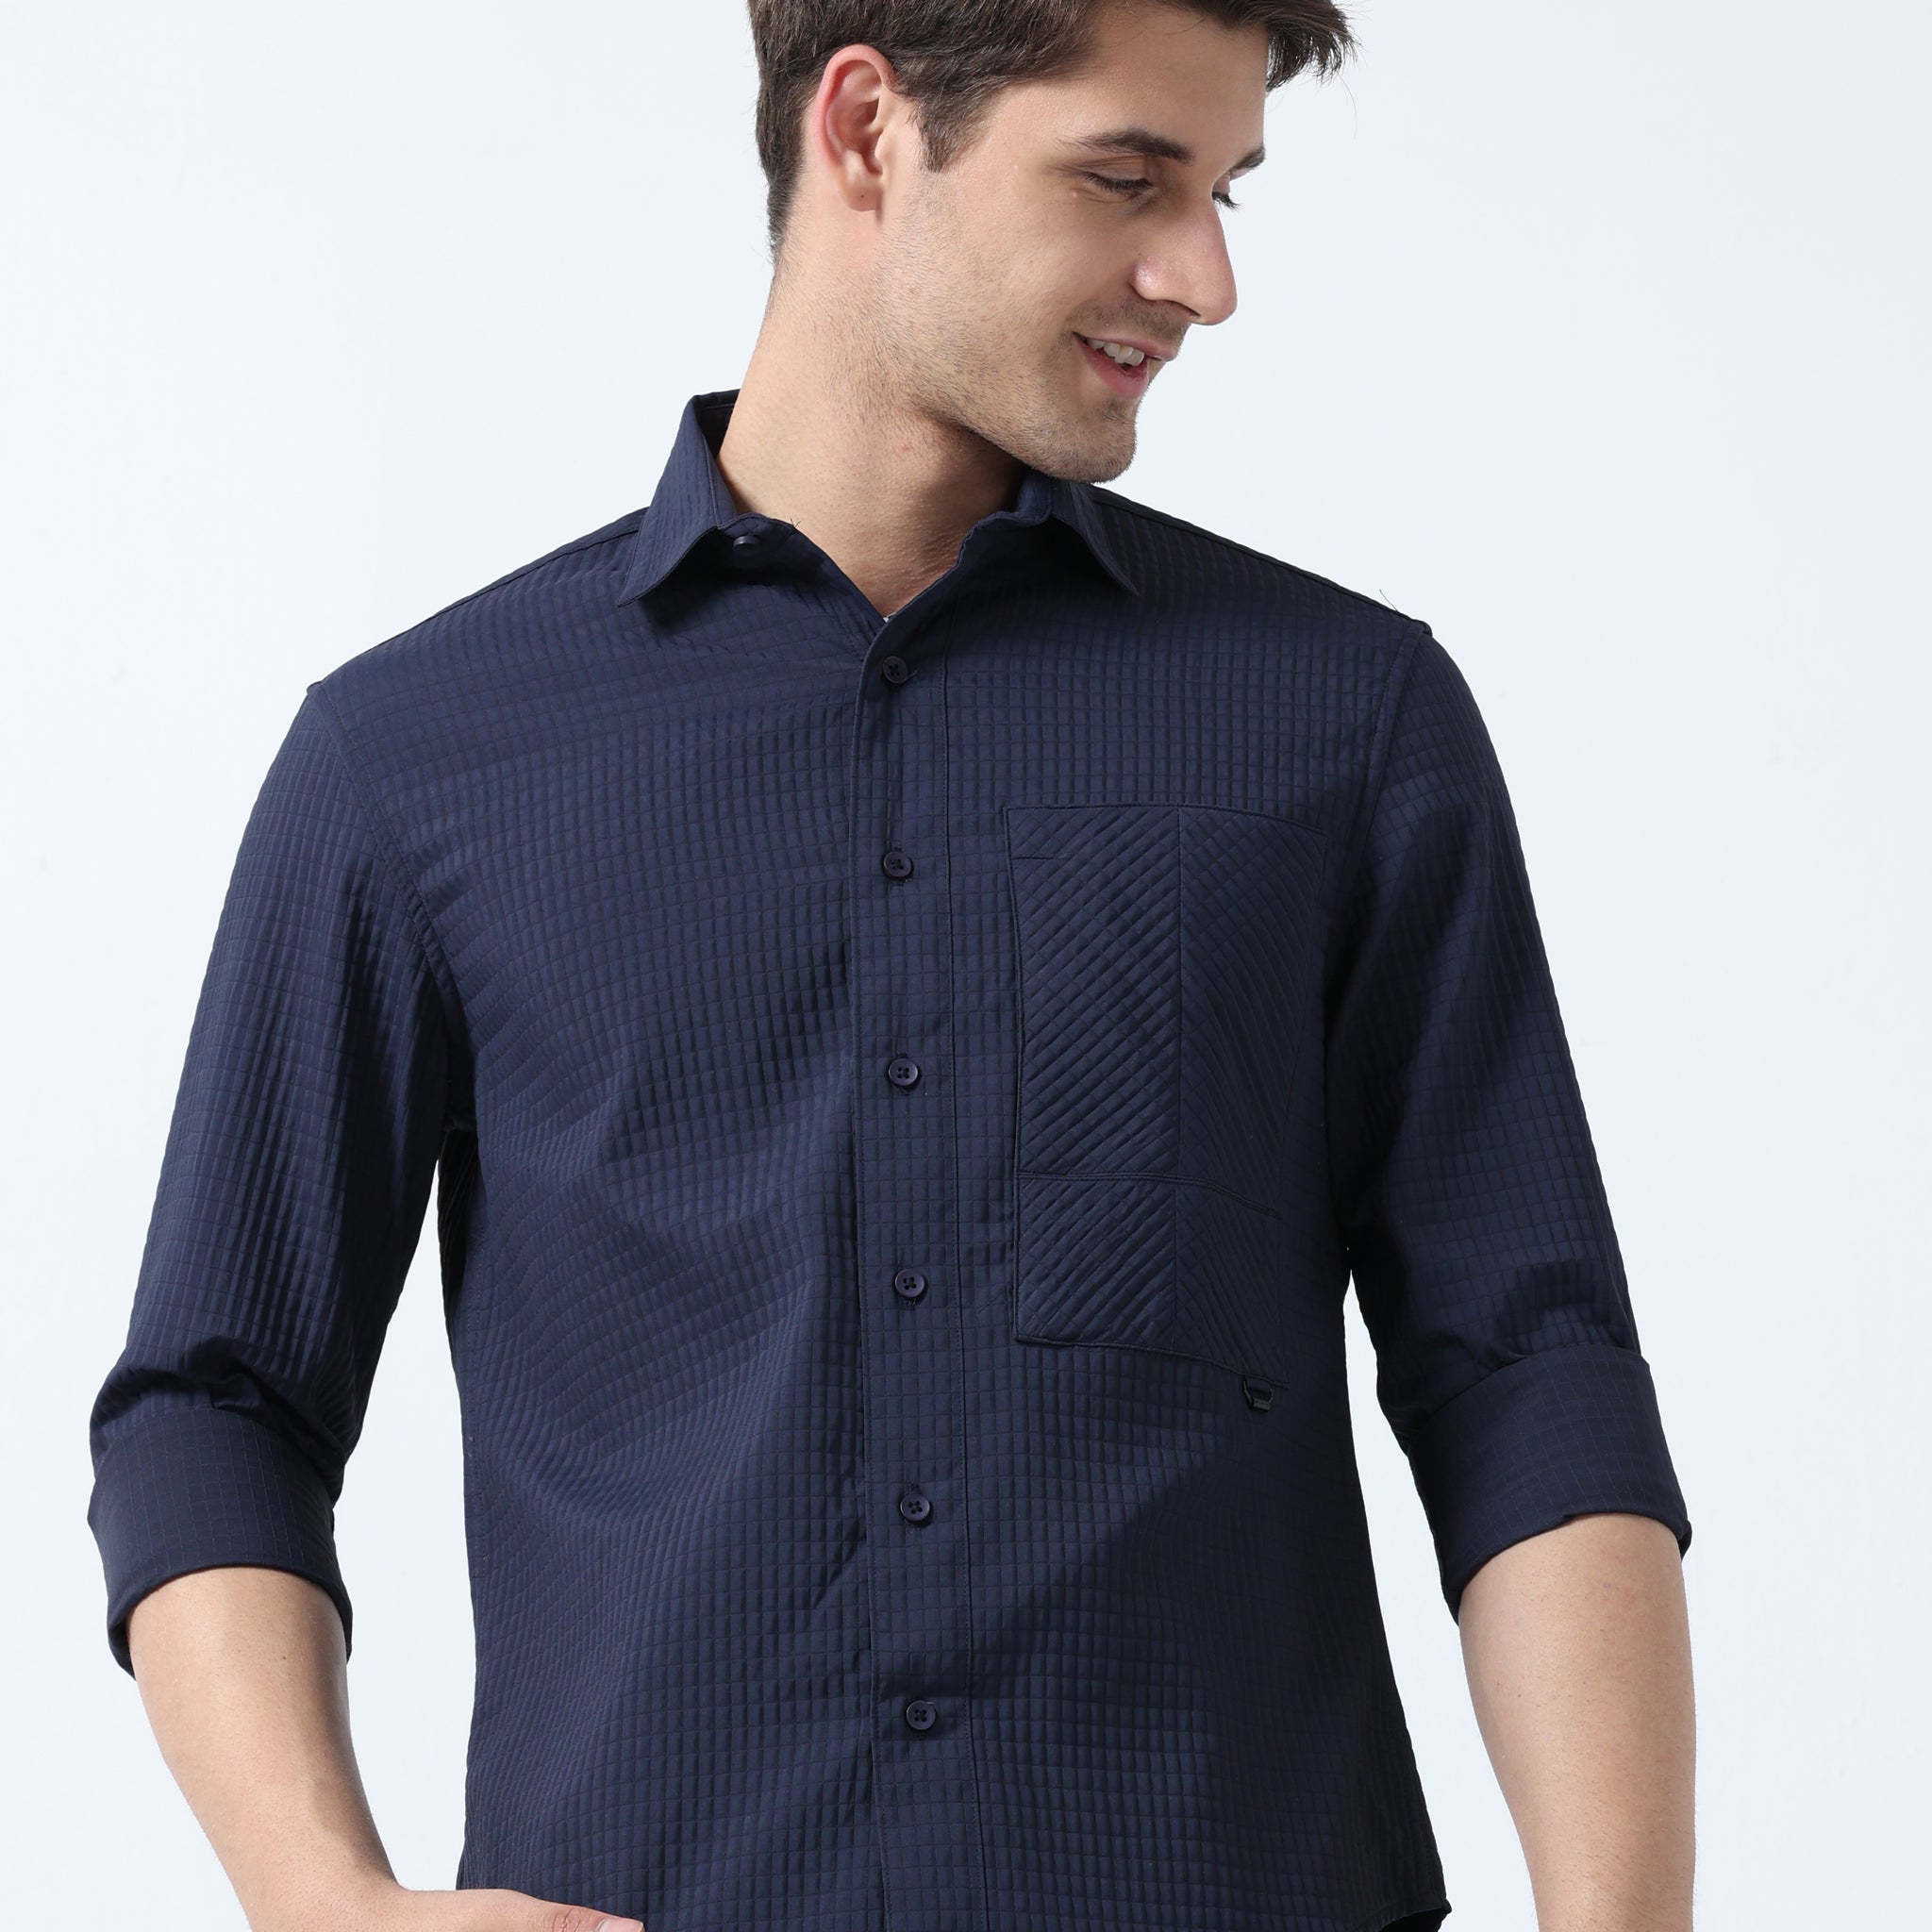 Full Sleeve Shirt with a Stylish Pocket Twist Men's shirt